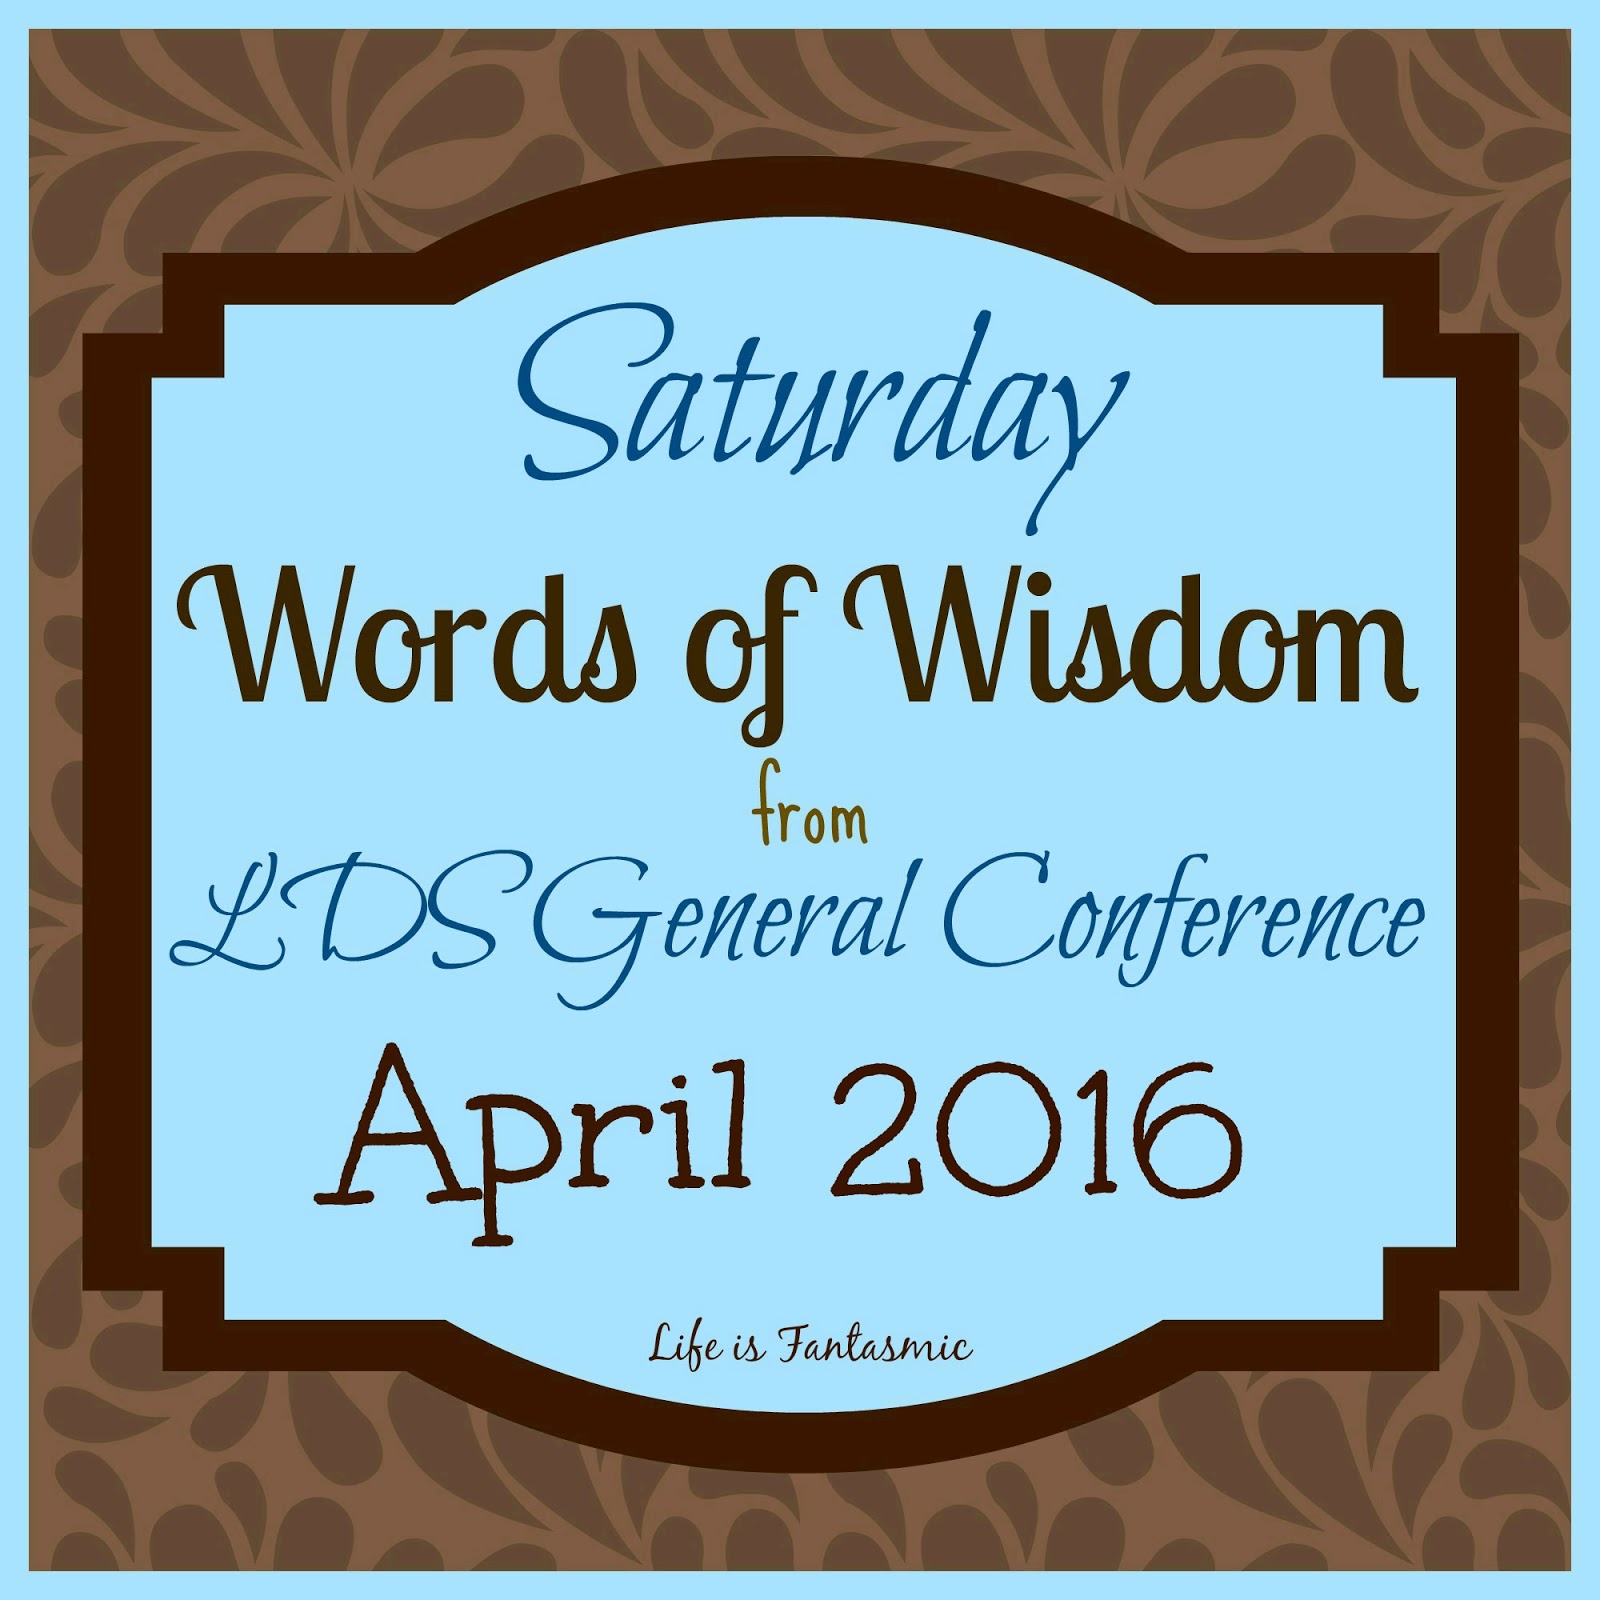 Life Is Fantasmic: LDS General Conference (April 2016 - Saturday)